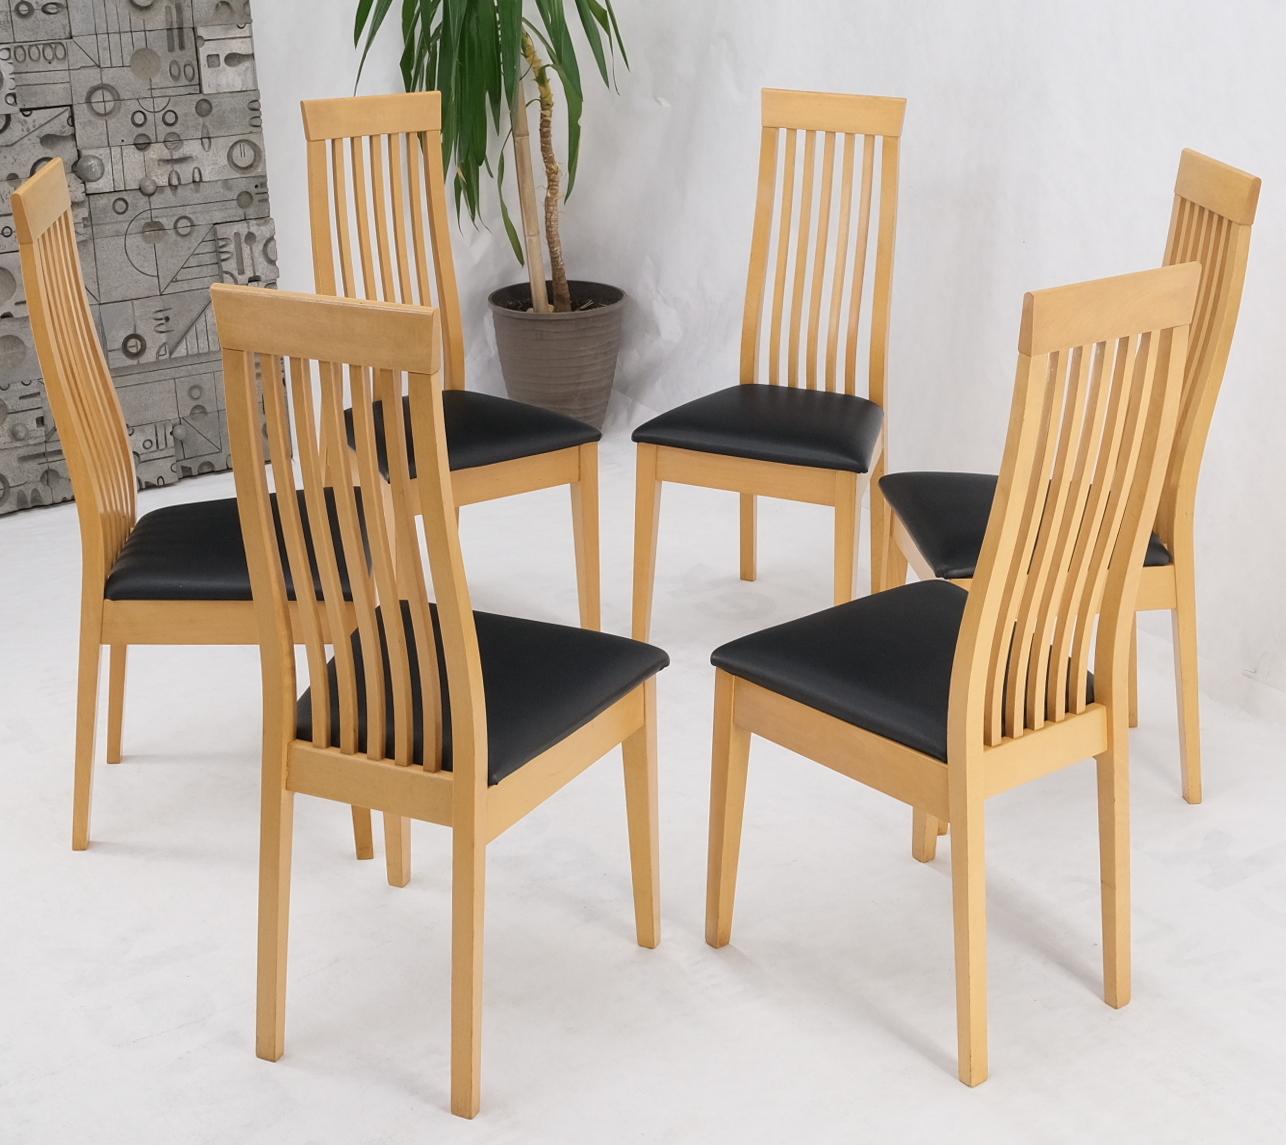 Set of 6 Italian Modern blond wood tall backs dining chairs.